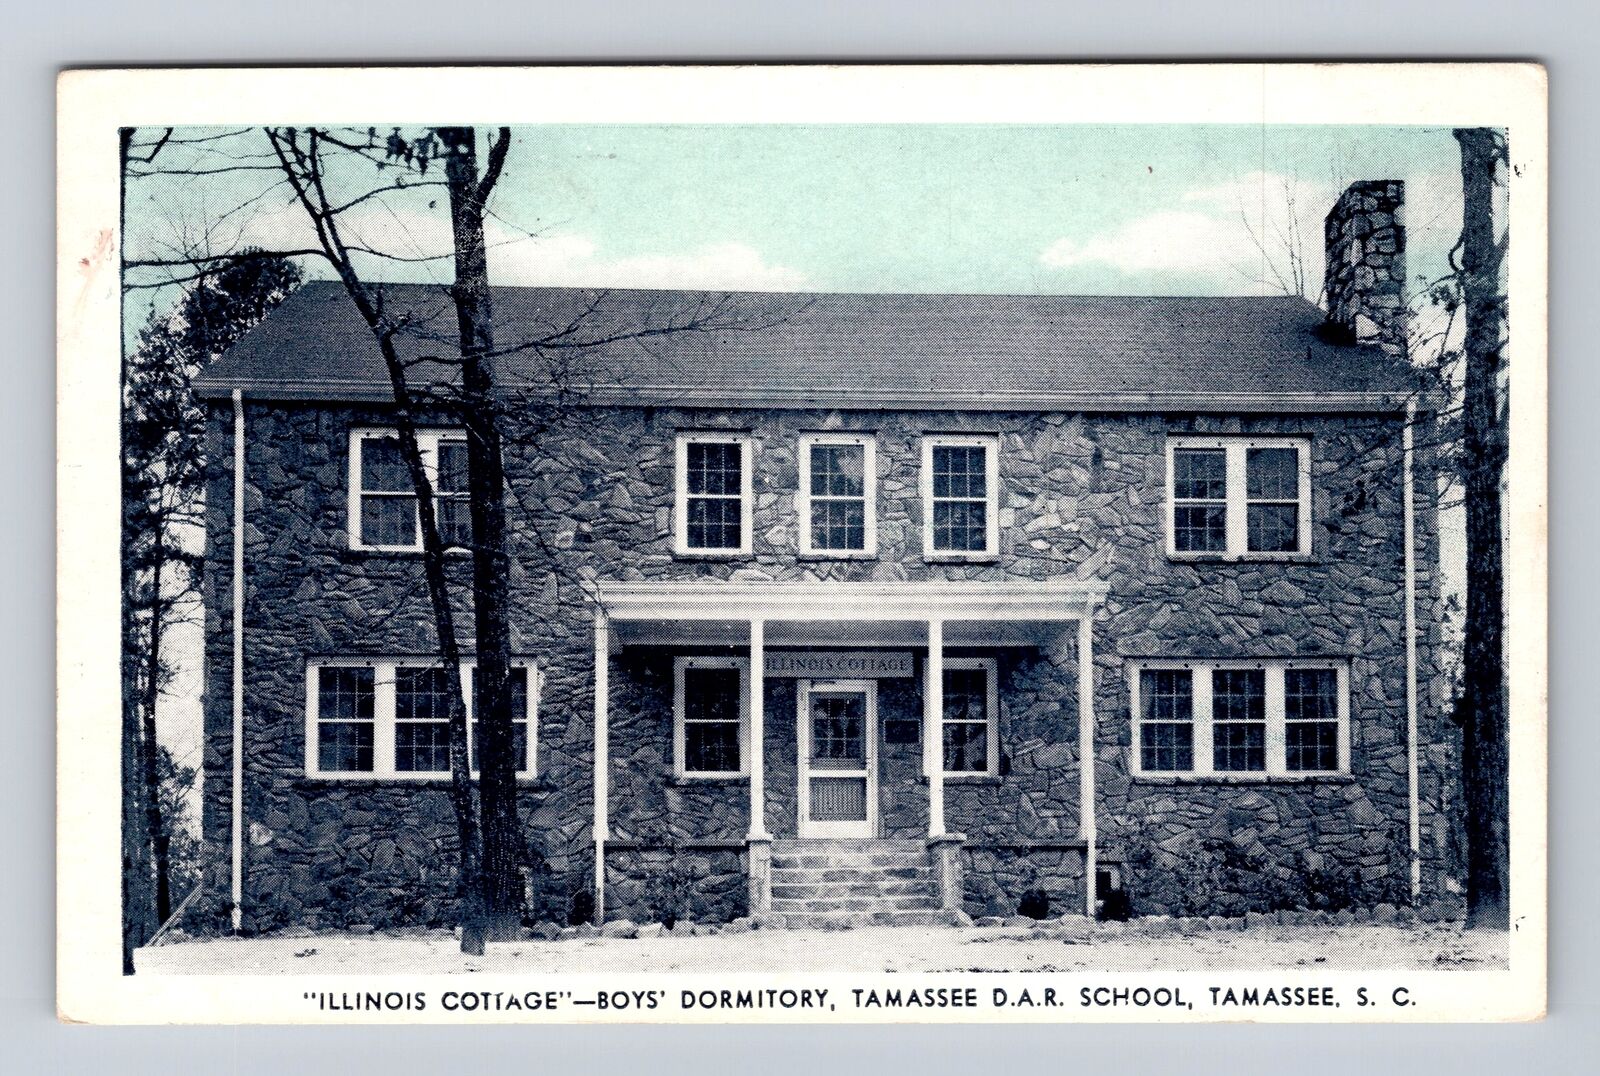 Tamassee SC-South Carolina, IL Cottage, Dormitory, DAR School Vintage Postcard